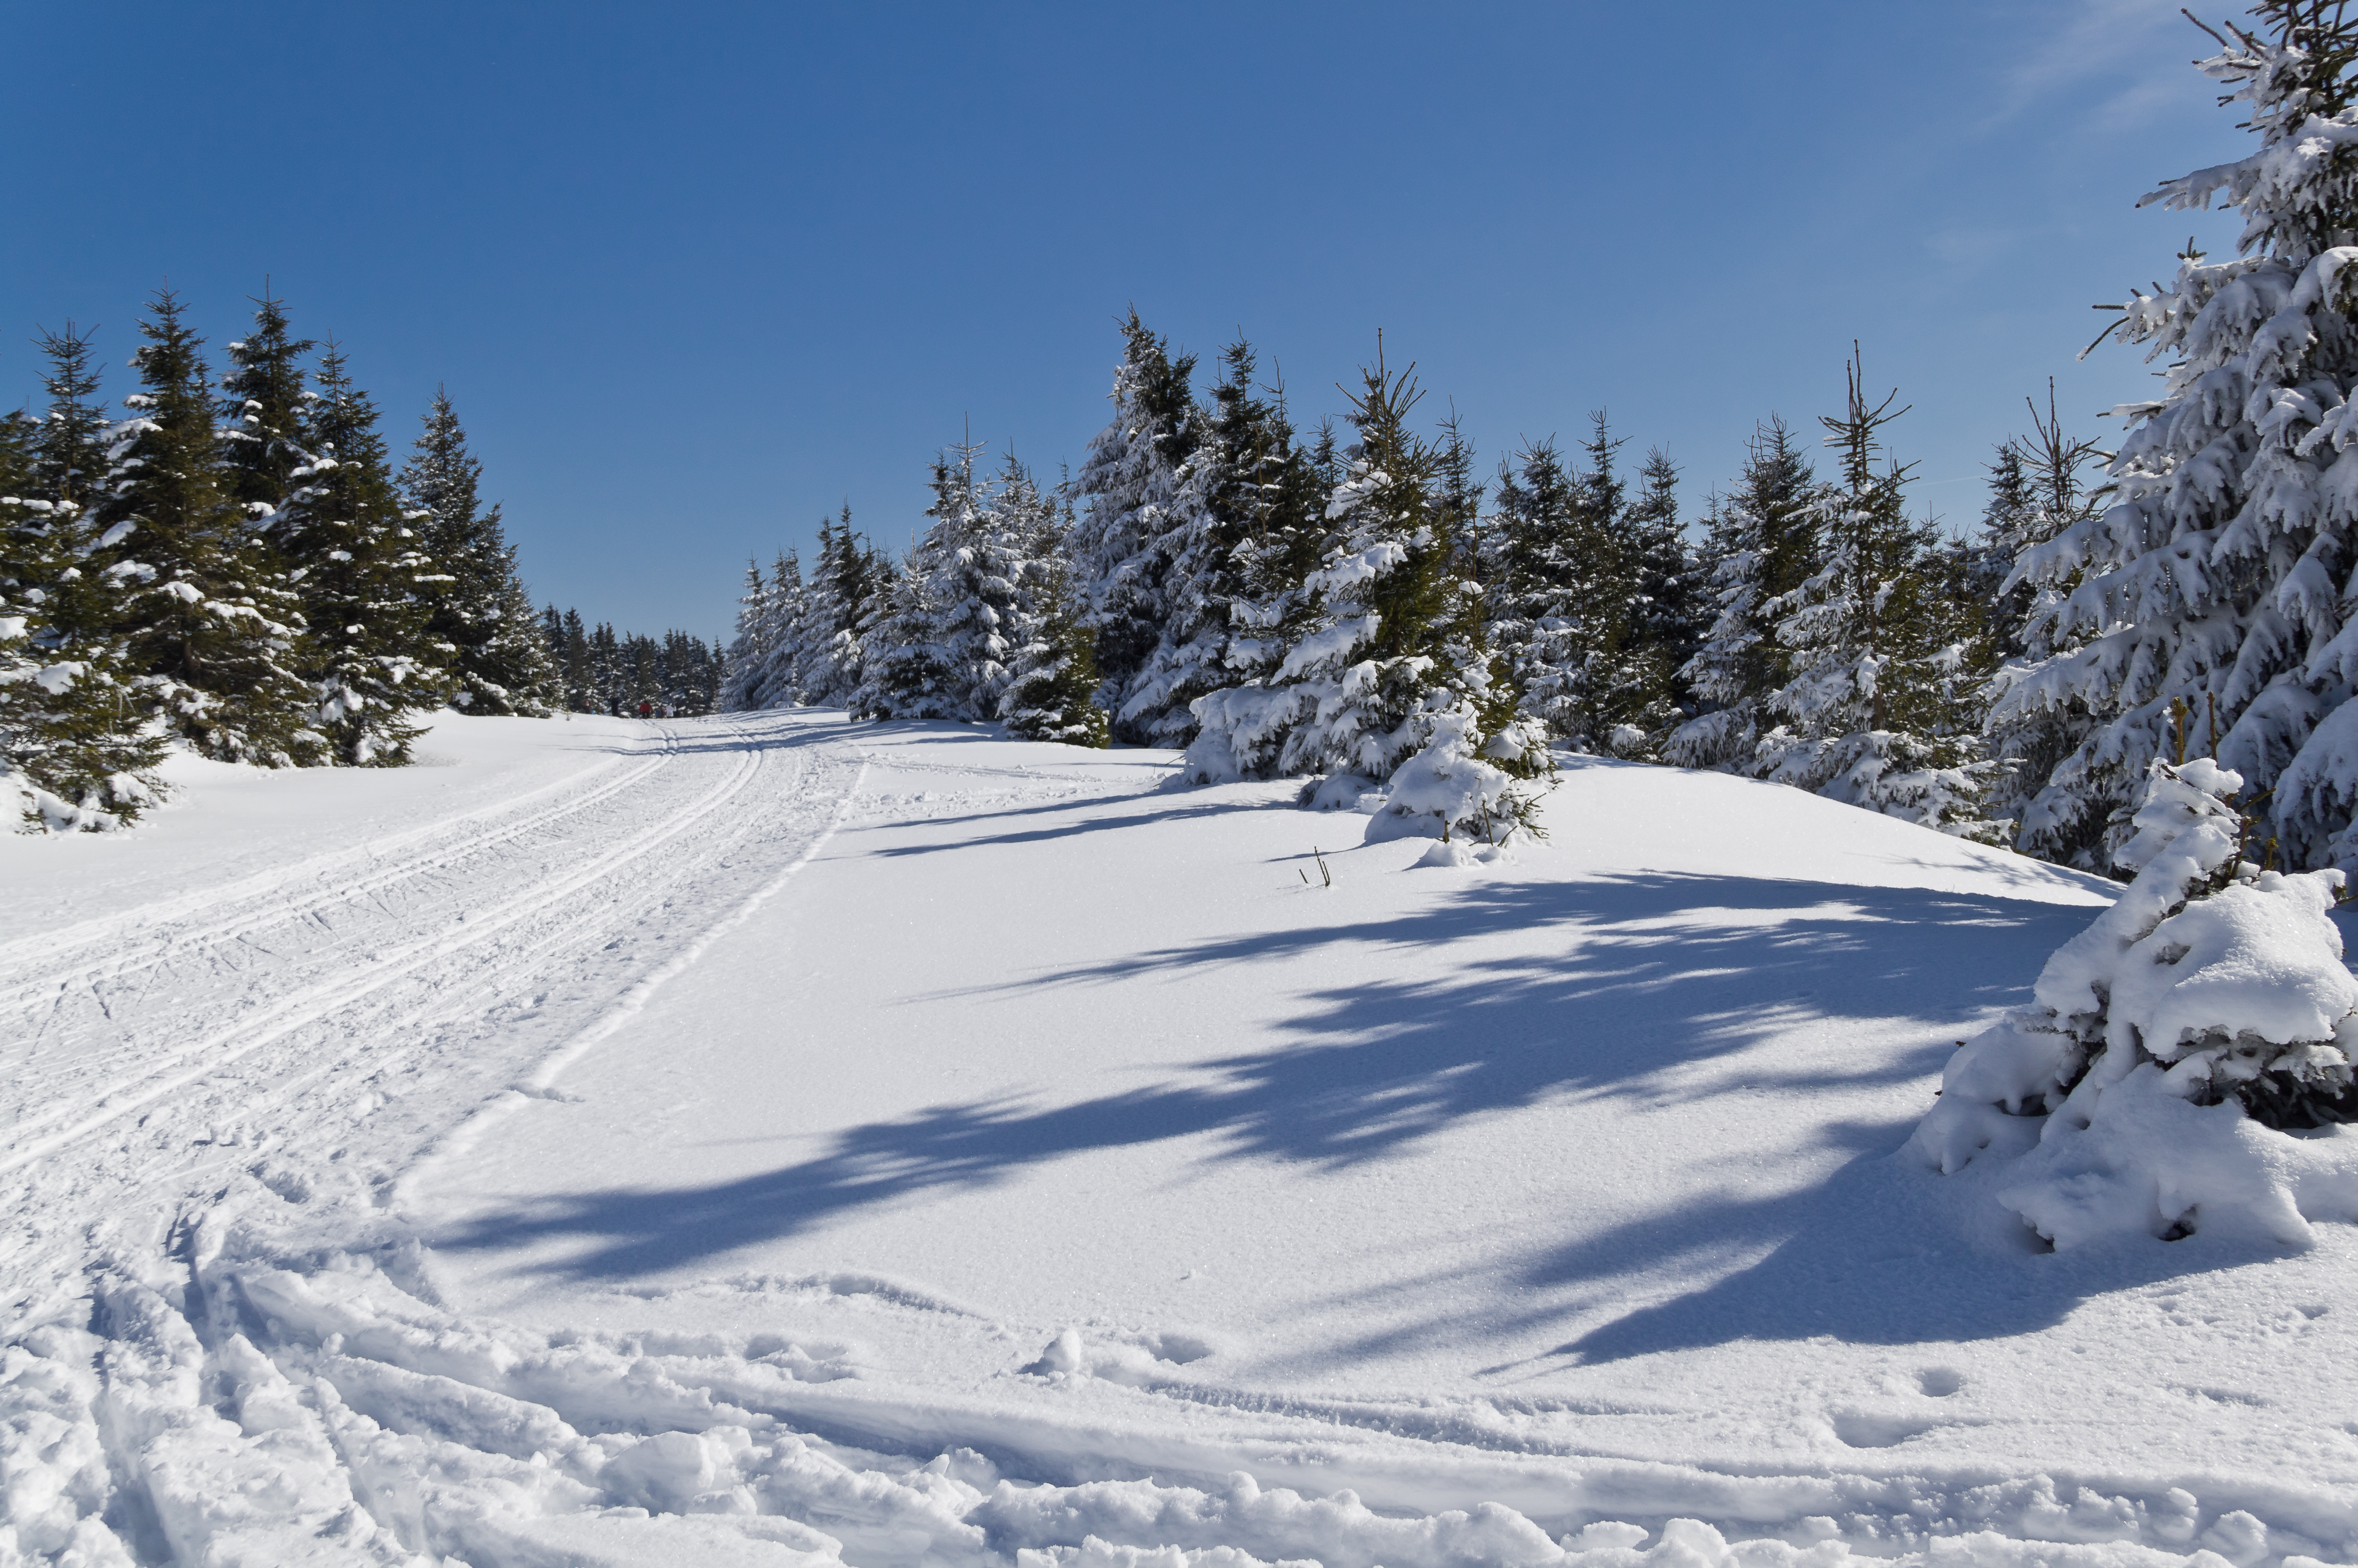 File:Skiing in Oberhof March 2013-13-Ski track.jpg - Wikimedia Commons